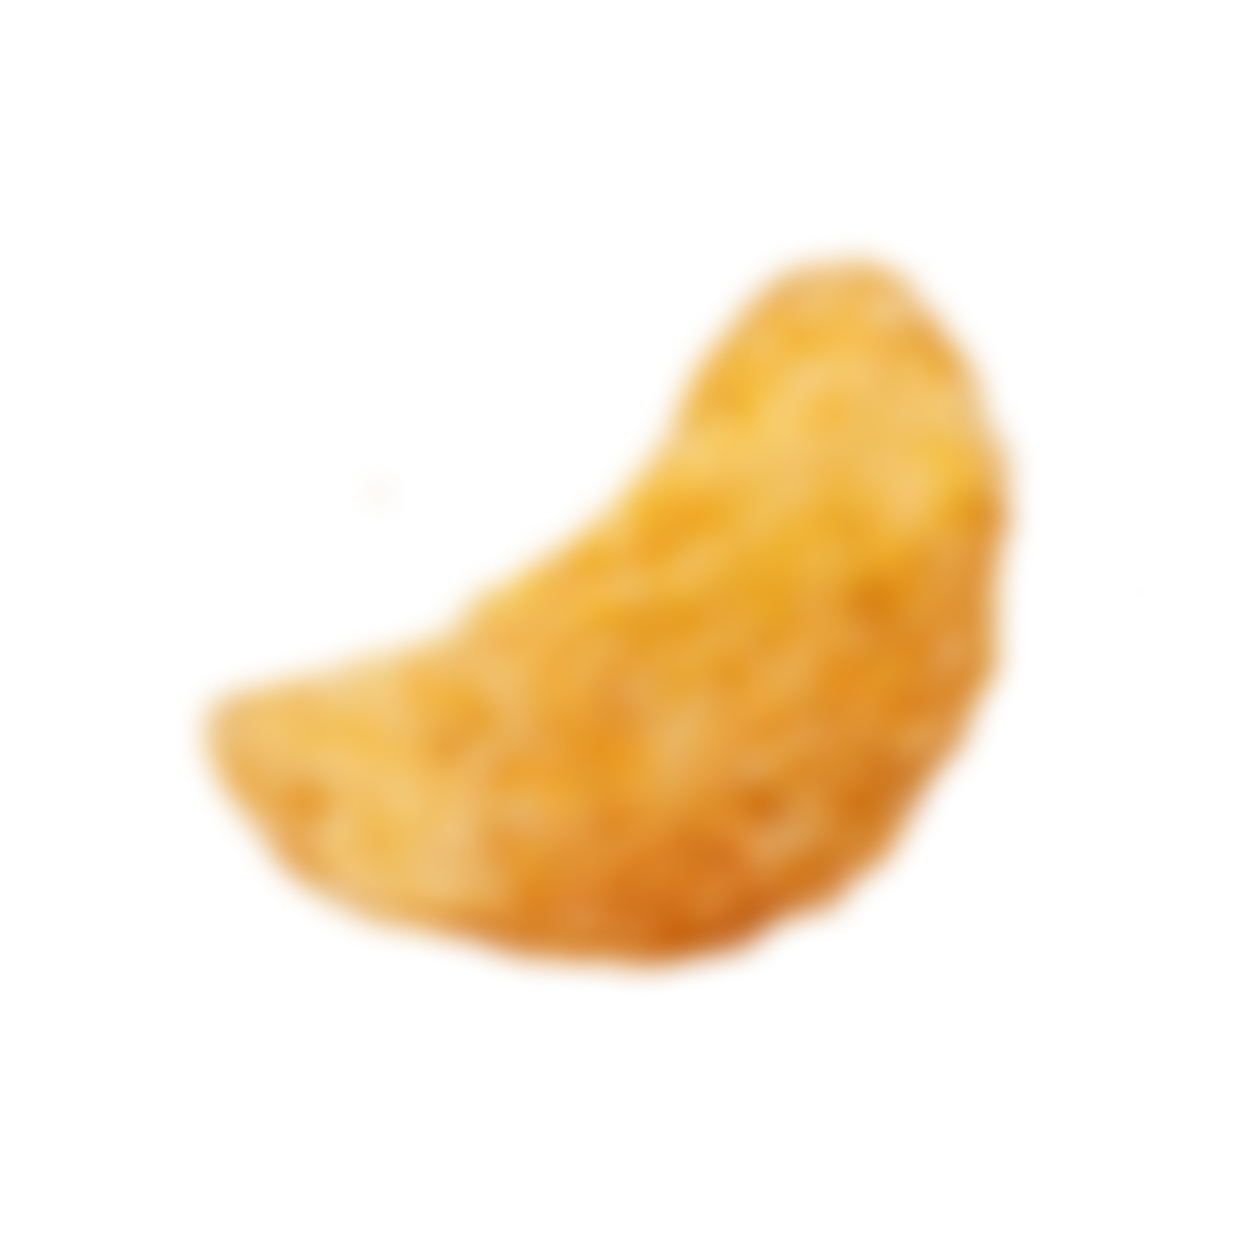 Potato Chip blured image